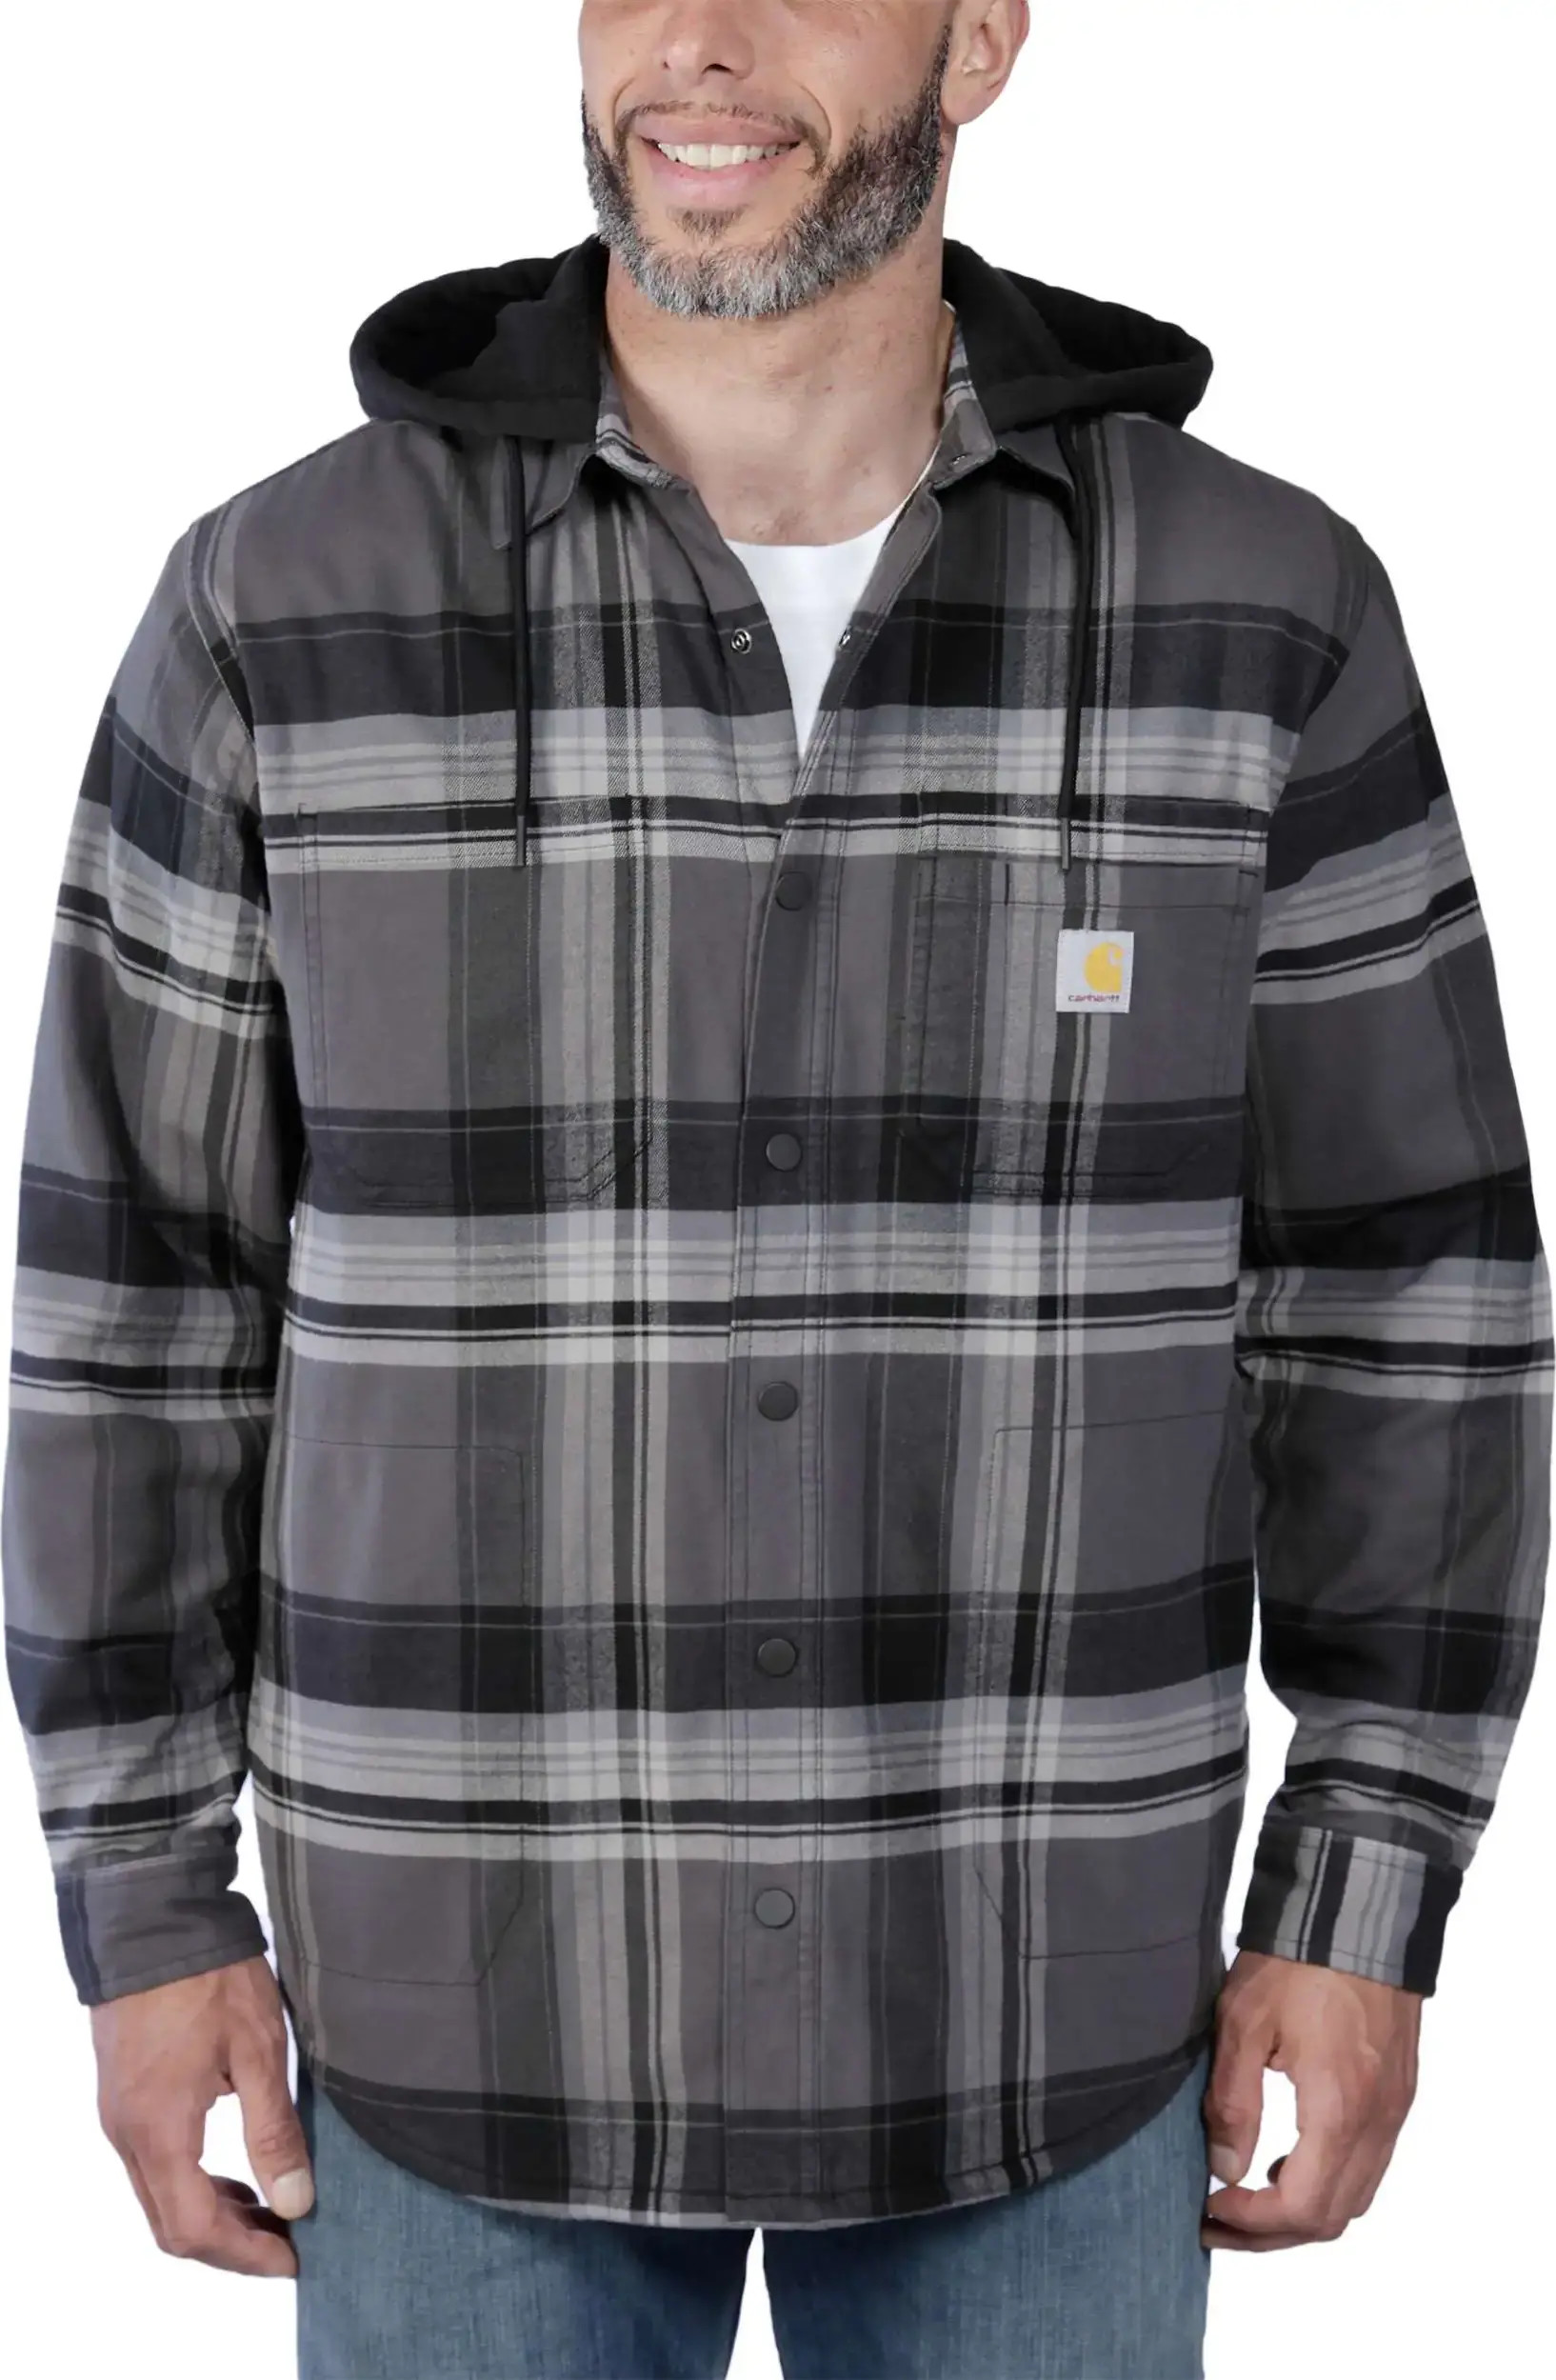 https://www.fjellsport.no/assets/blobs/carhartt-men-s-flannel-fleece-lined-hooded-shirt-jacket-black-b3f21c2a90.jpeg